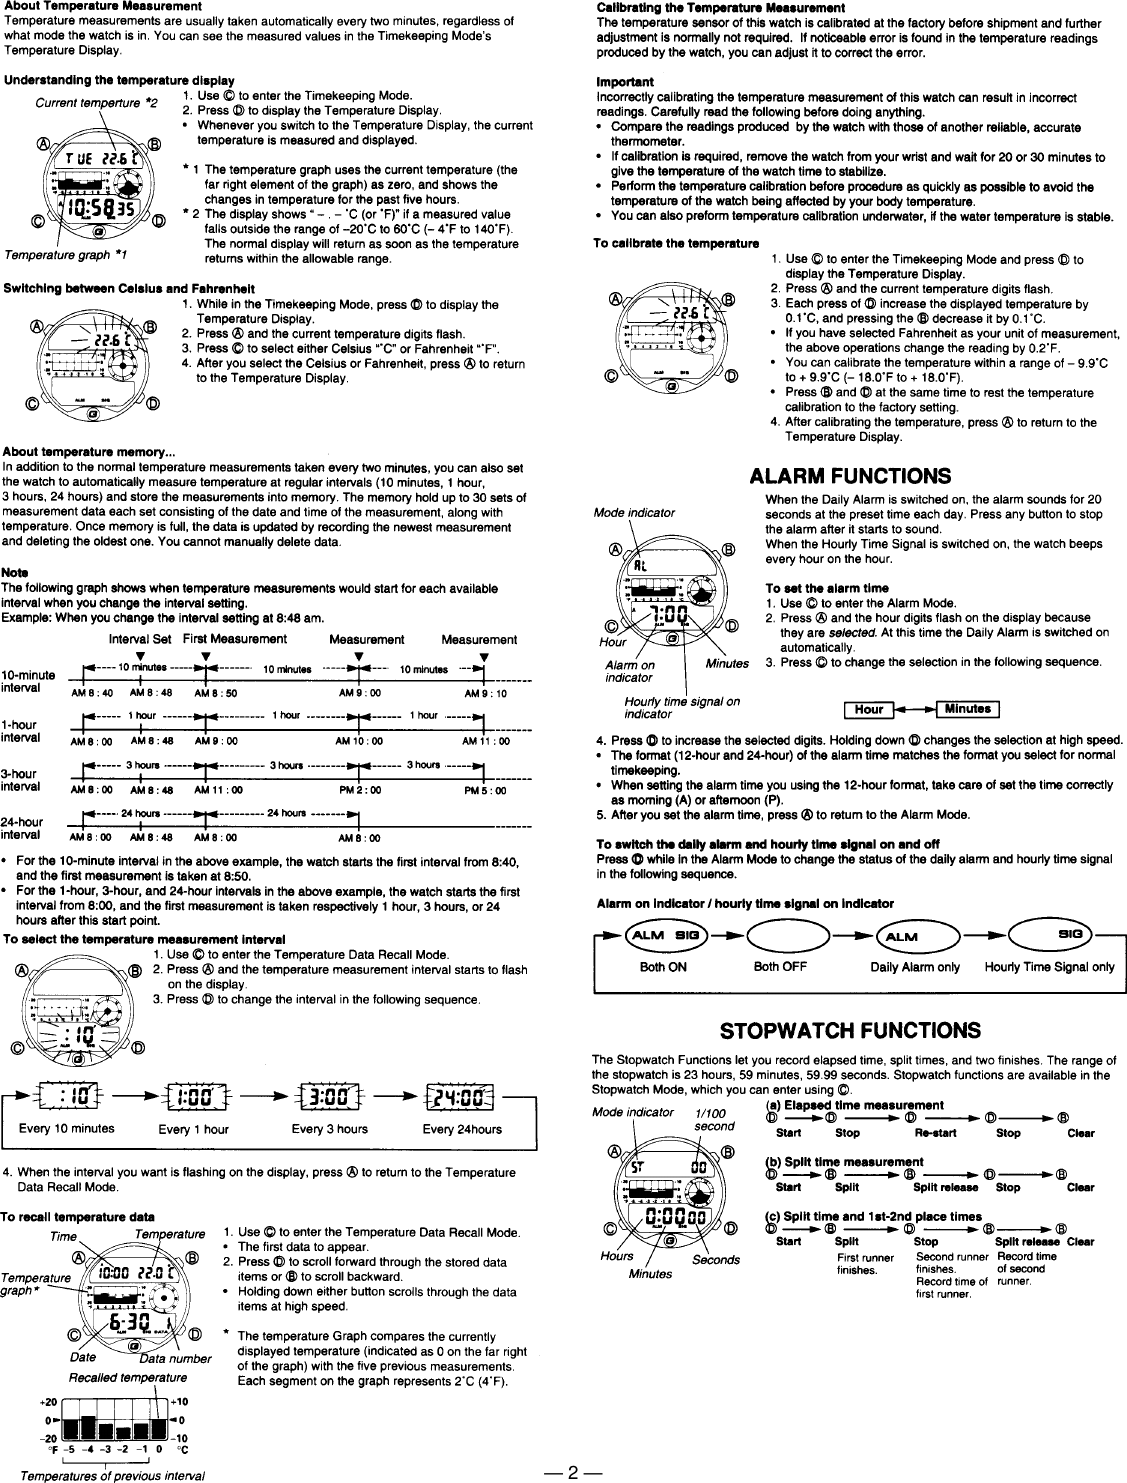 Page 2 of 3 - Casio Casio-Qw-1210-Users-Manual- S/M-467(QW-1210)  Casio-qw-1210-users-manual